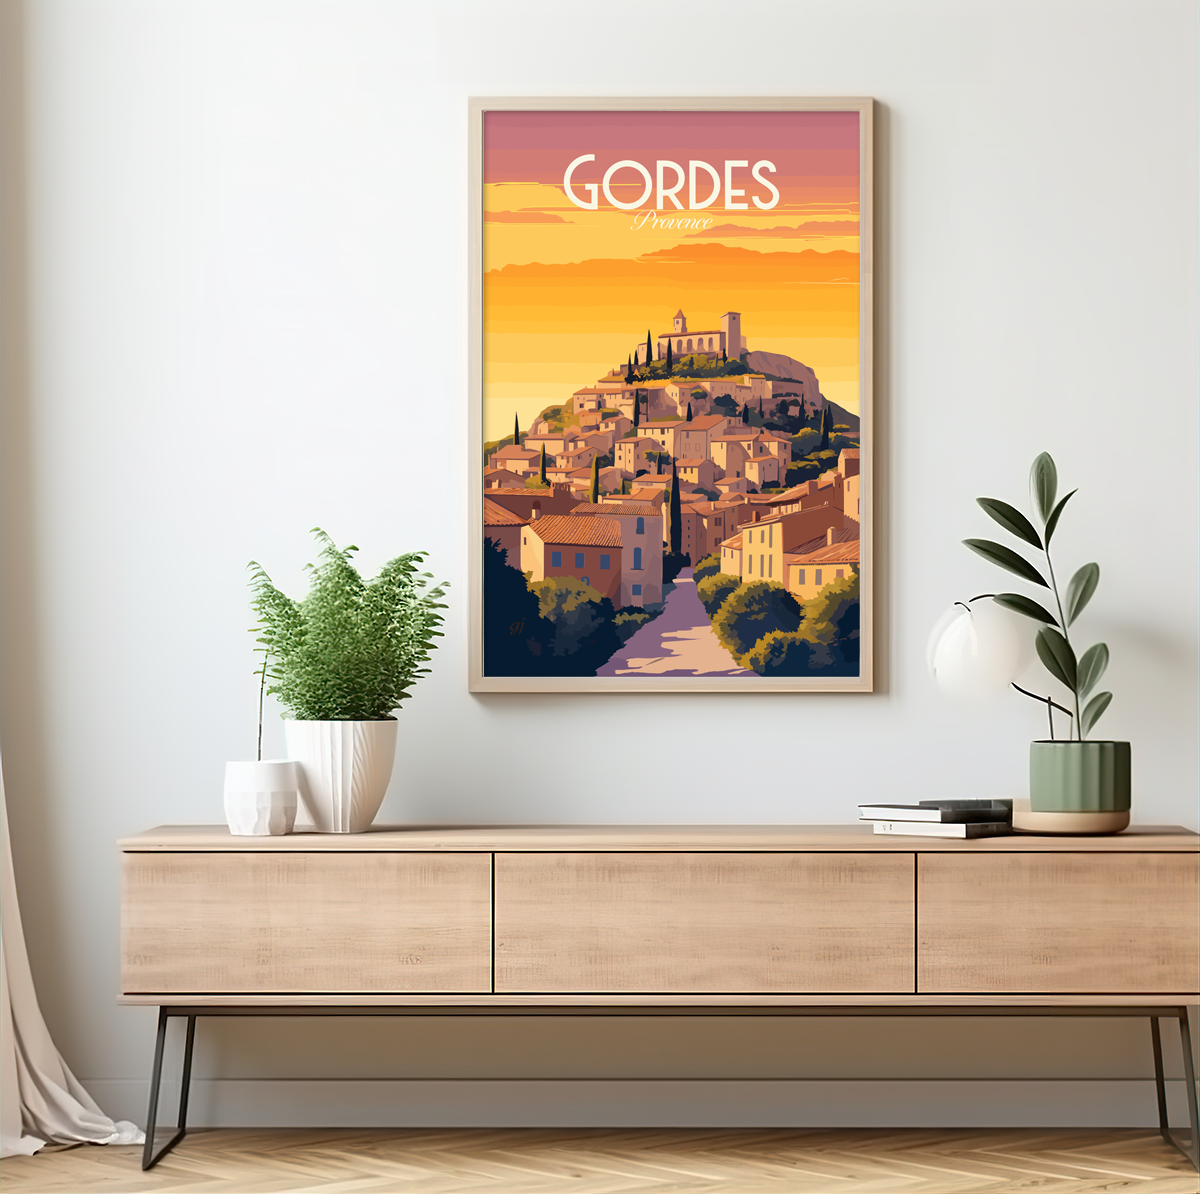 Gordes poster by bon voyage design